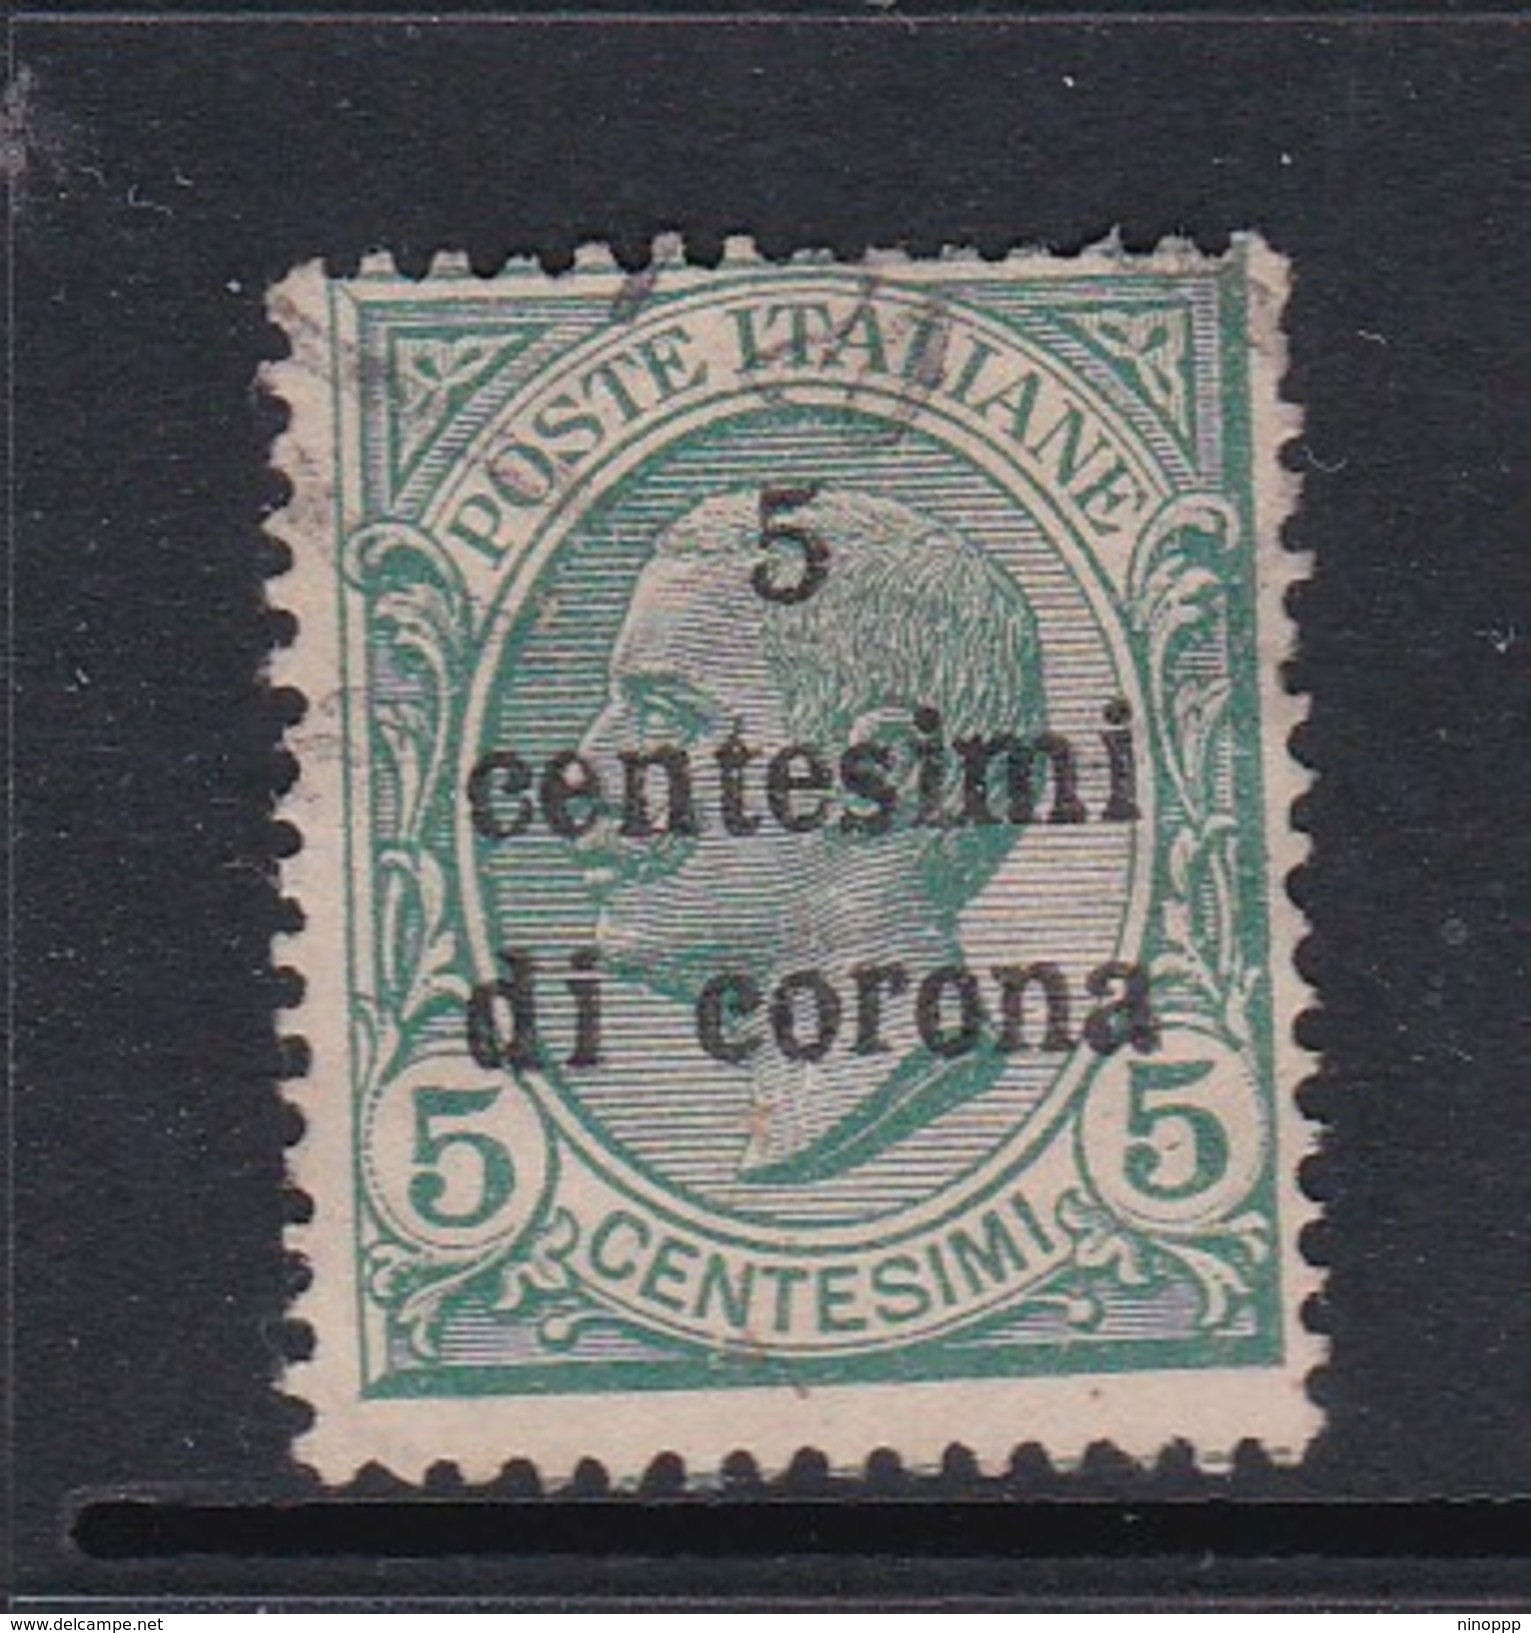 Venezia Giulia N66 1919 Italian Stamps Overprinted 5c On 5c Green  Used - Austrian Occupation